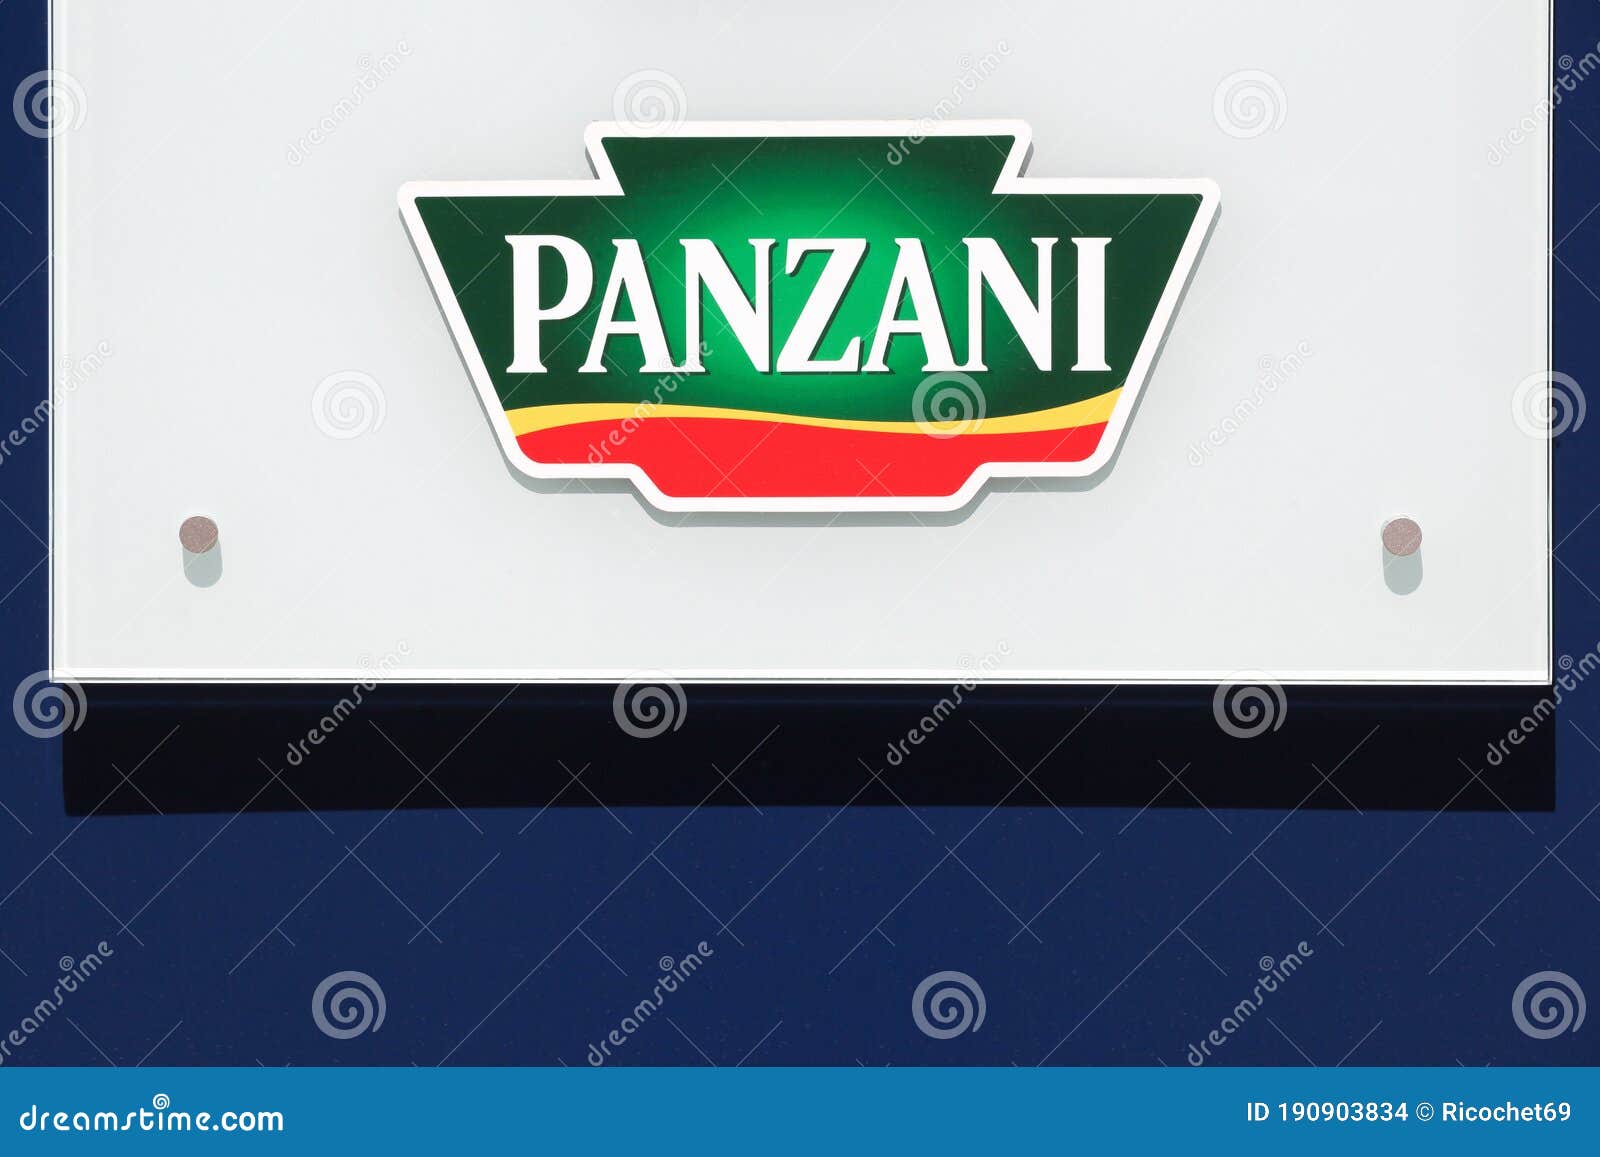 Panzani logo on a wall editorial stock image. Image of gourmet